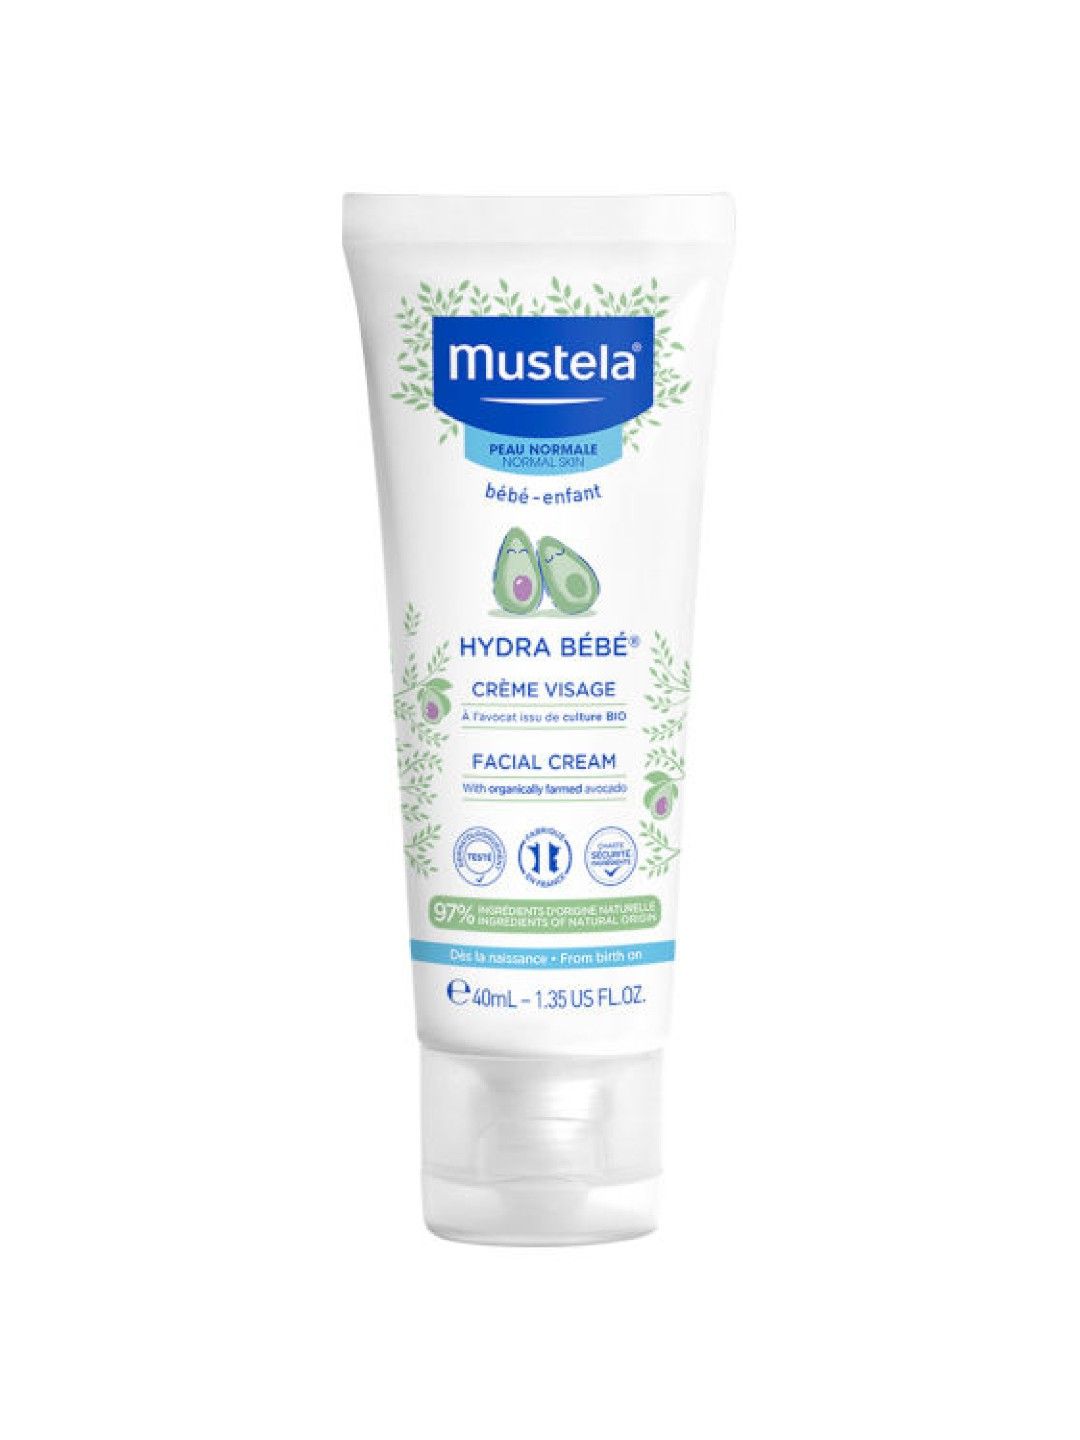 Mustela Hydrabebe Facial Cream (40ml)